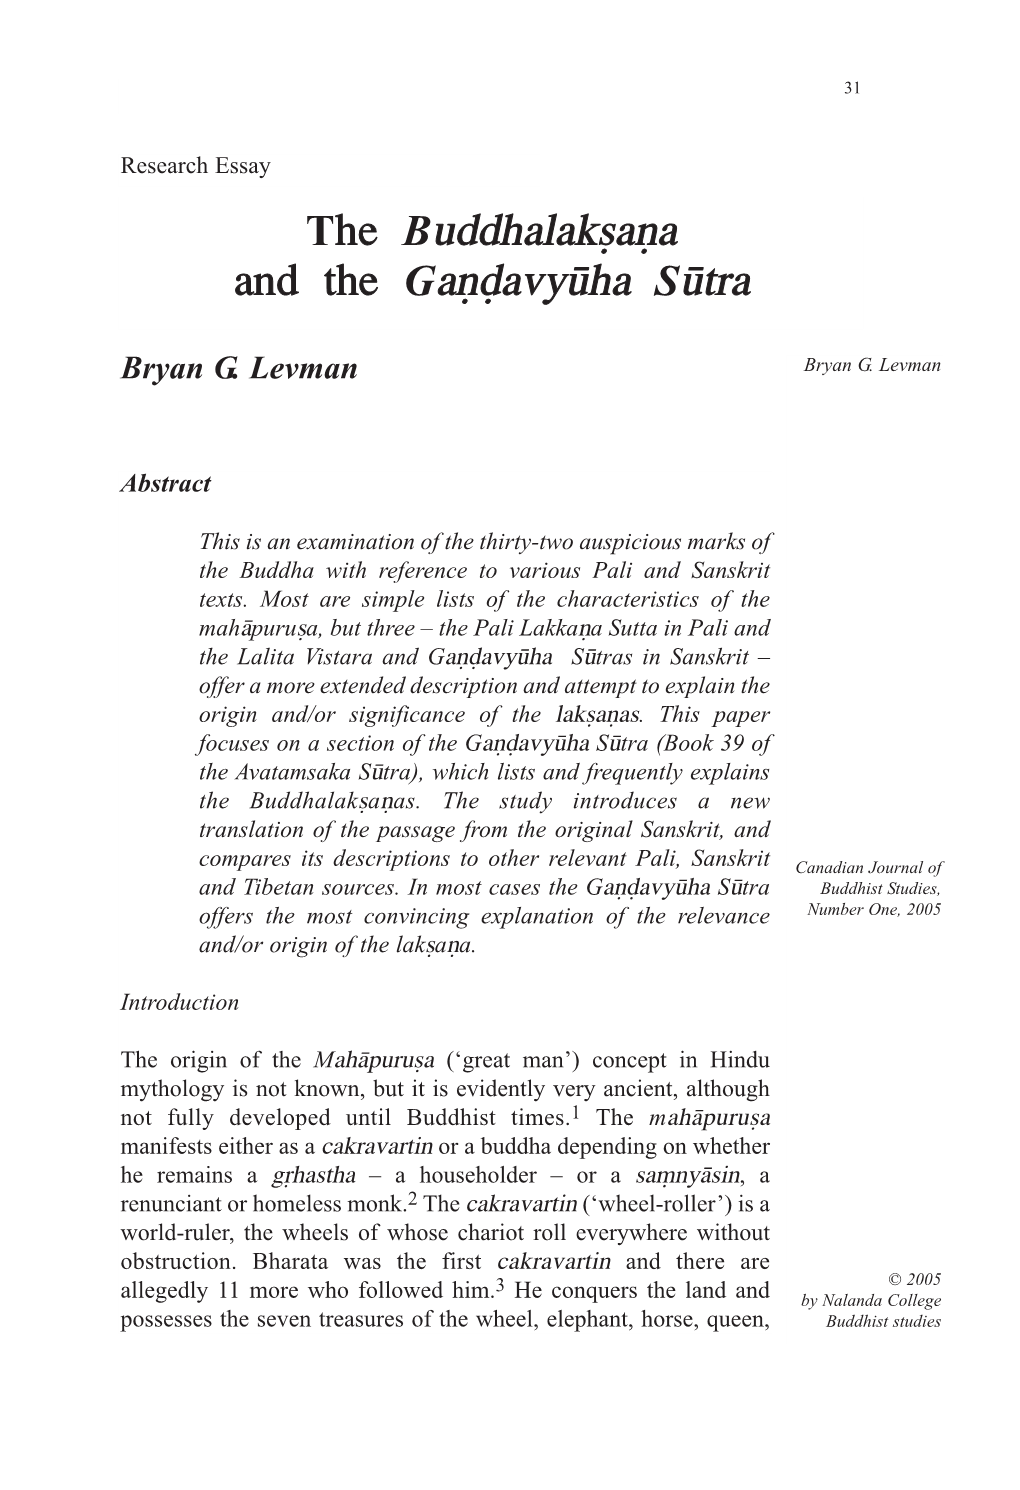 The Buddhalaksana and the Gandavyuha Sutra